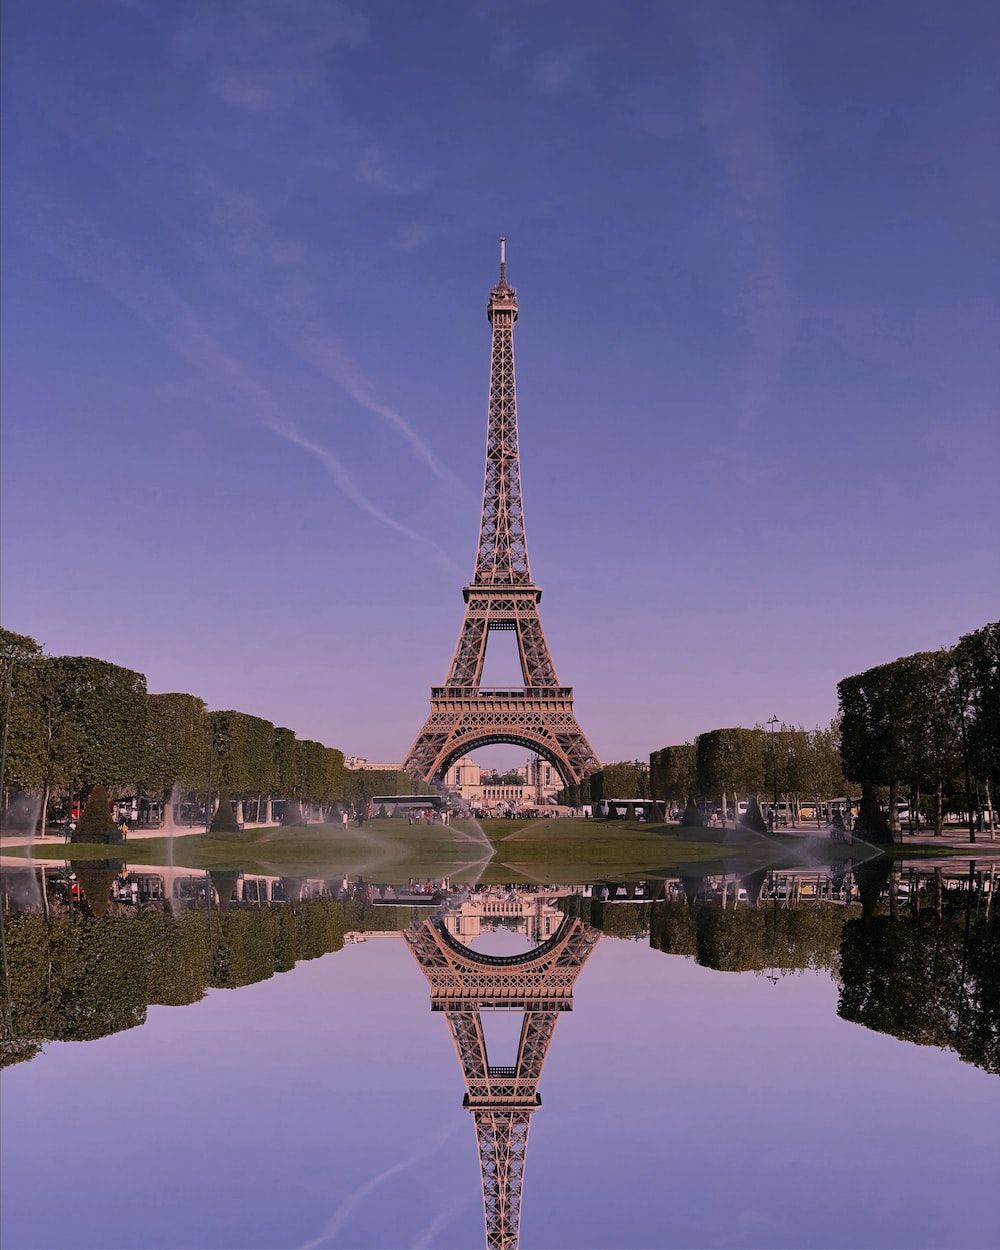 Eiffel Tower, Paris, France Picture. Download Free Image